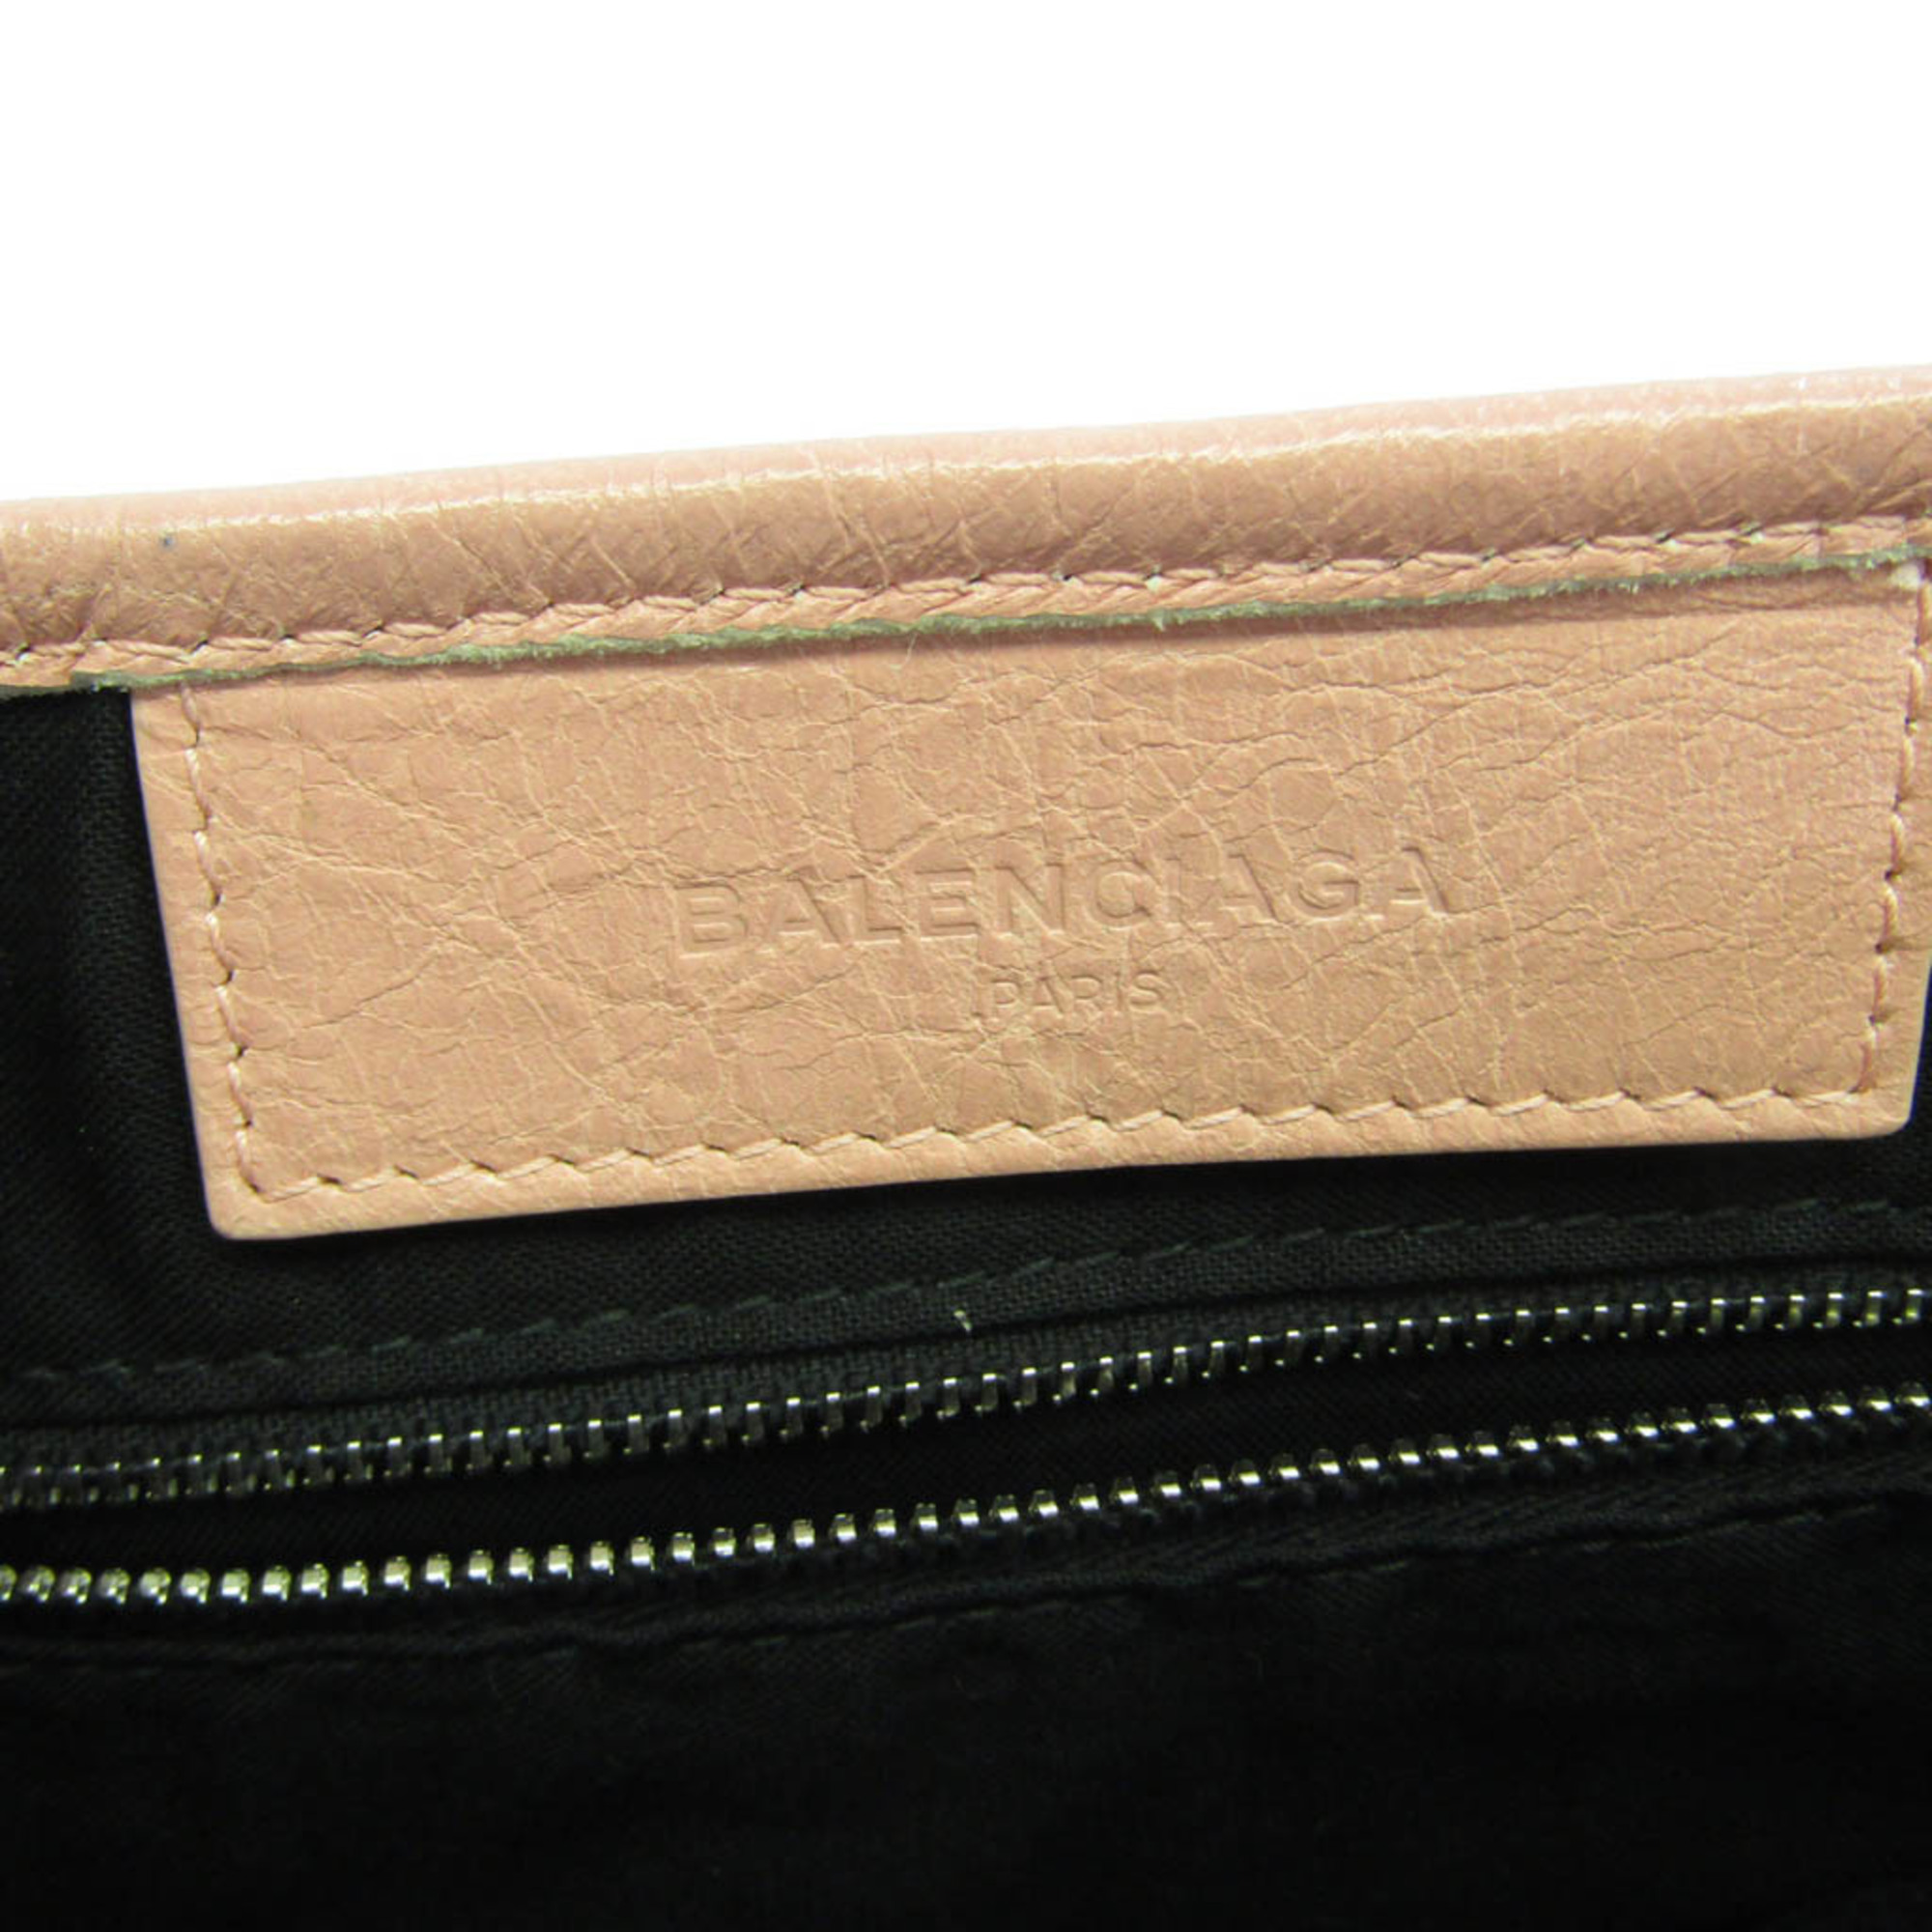 Balenciaga Navy Cabas XS 390346 Women's Canvas,Leather Handbag,Shoulder Bag Light Pink